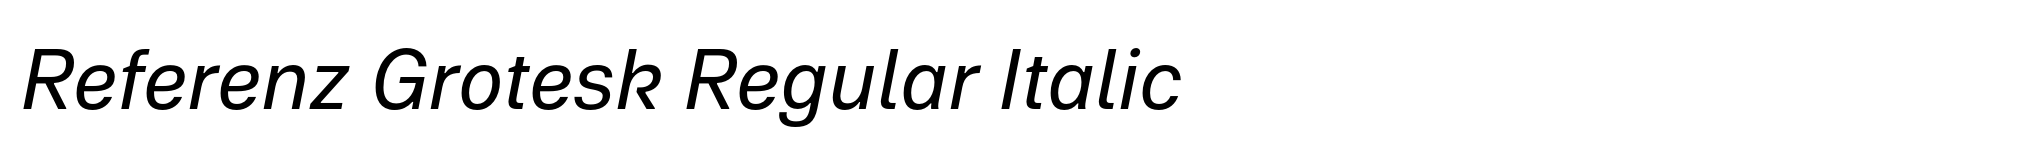 Referenz Grotesk Regular Italic image